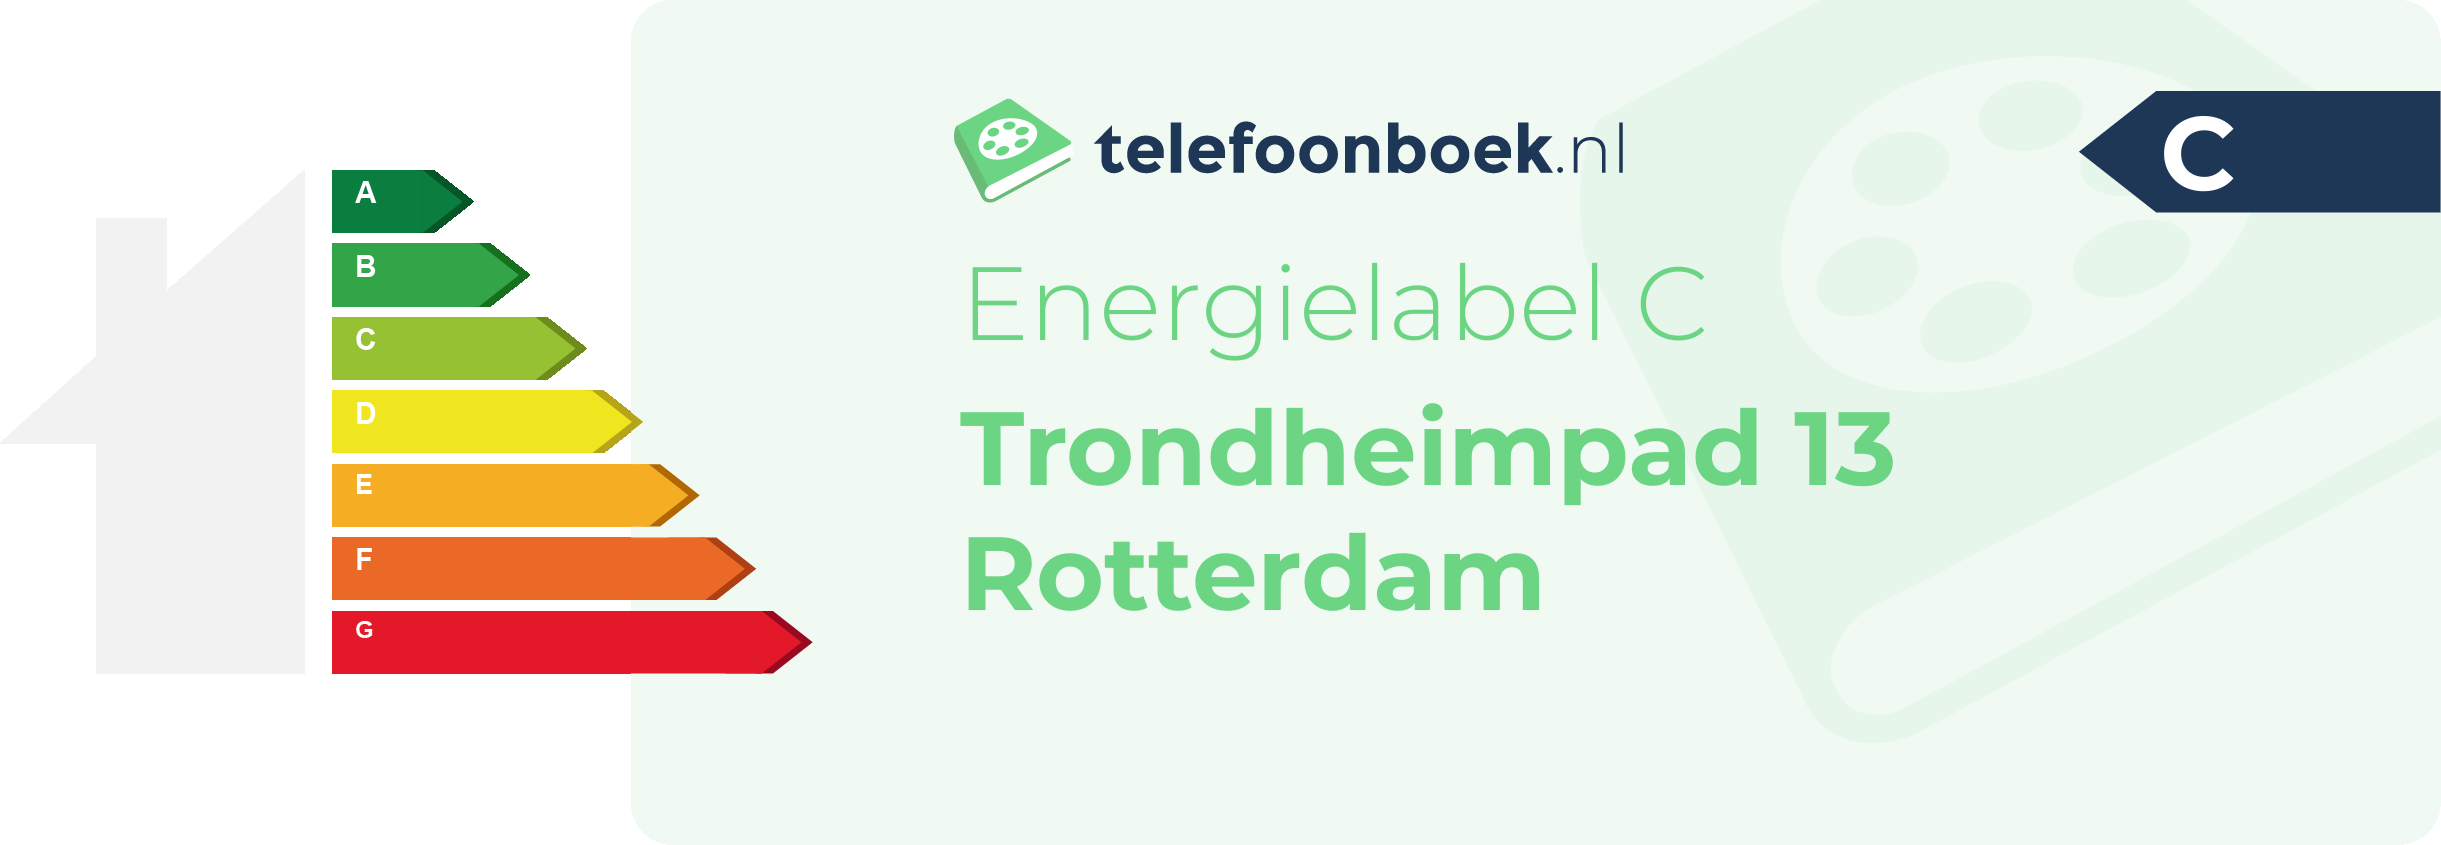 Energielabel Trondheimpad 13 Rotterdam